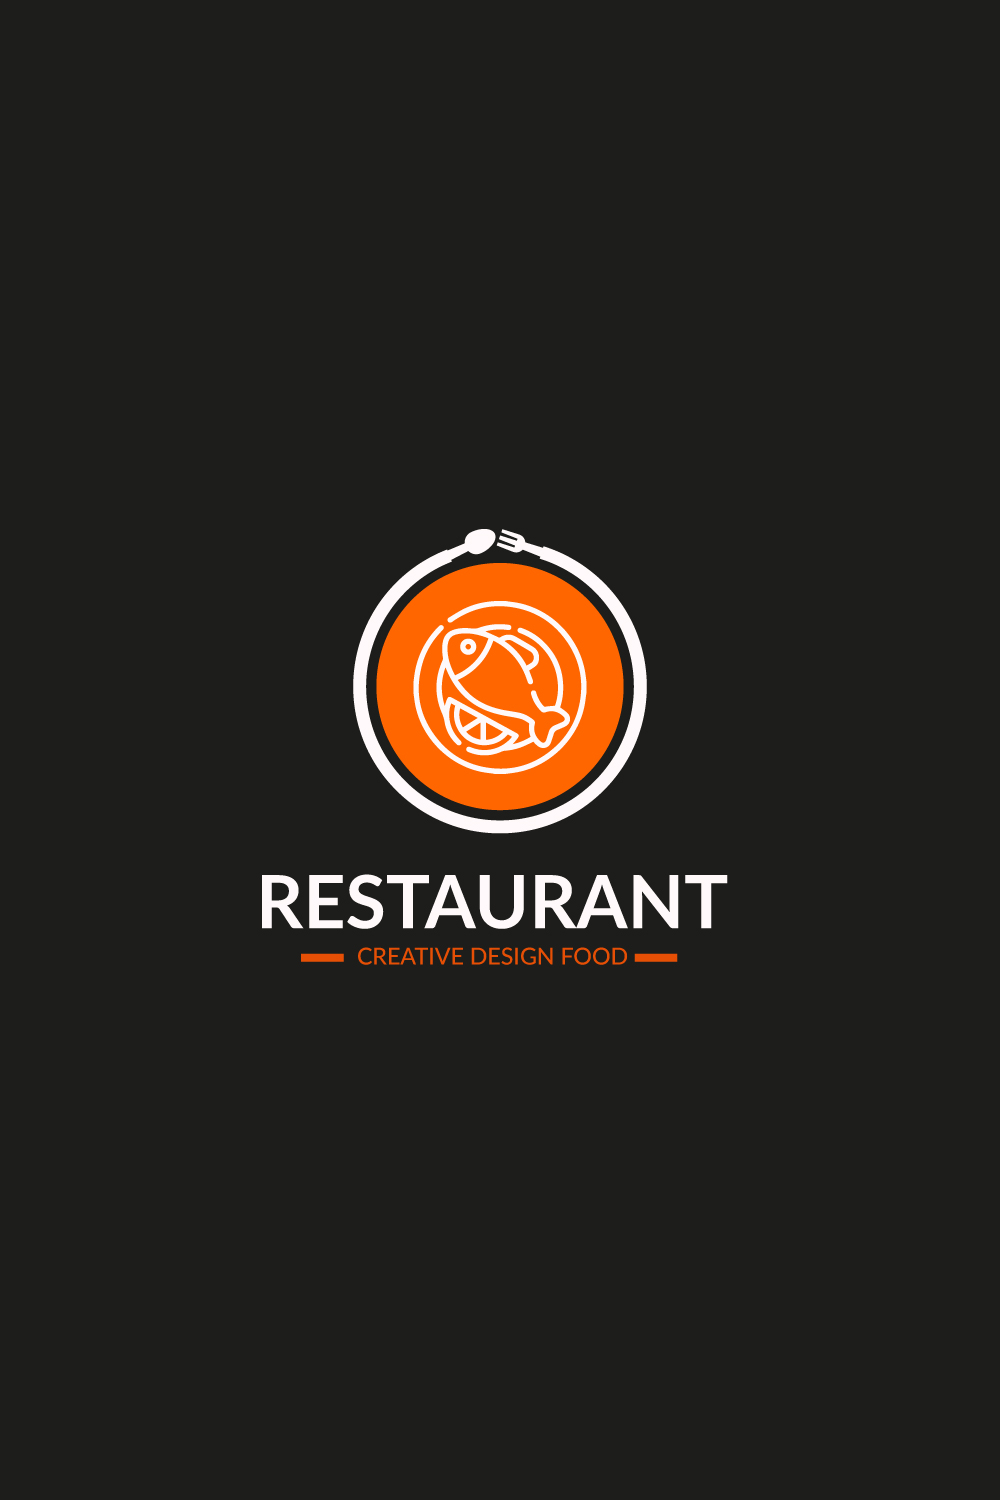 food logo deisgn pinterest preview image.